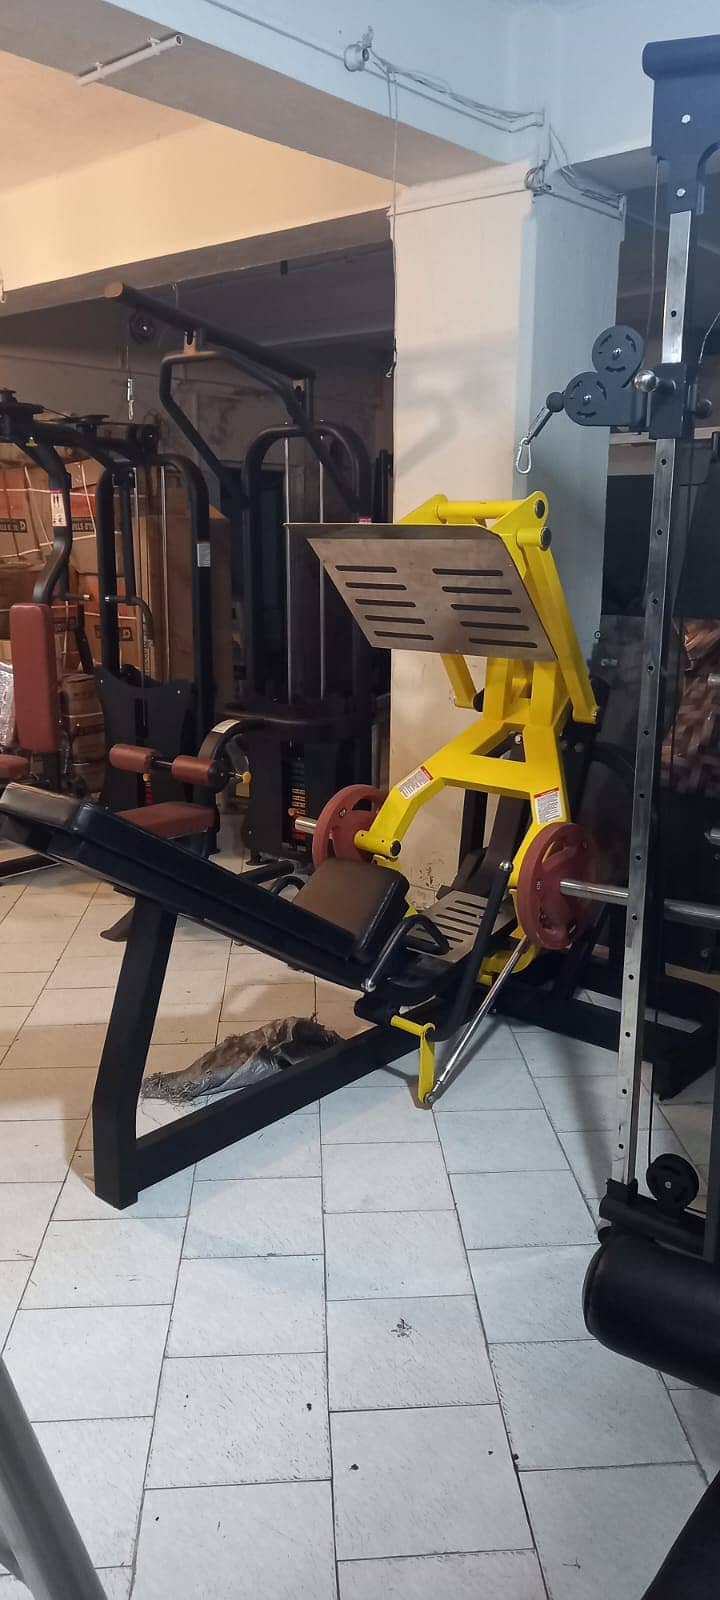 complete gym equipment setup Treadmill Elliptical dumbbell plate rod 0